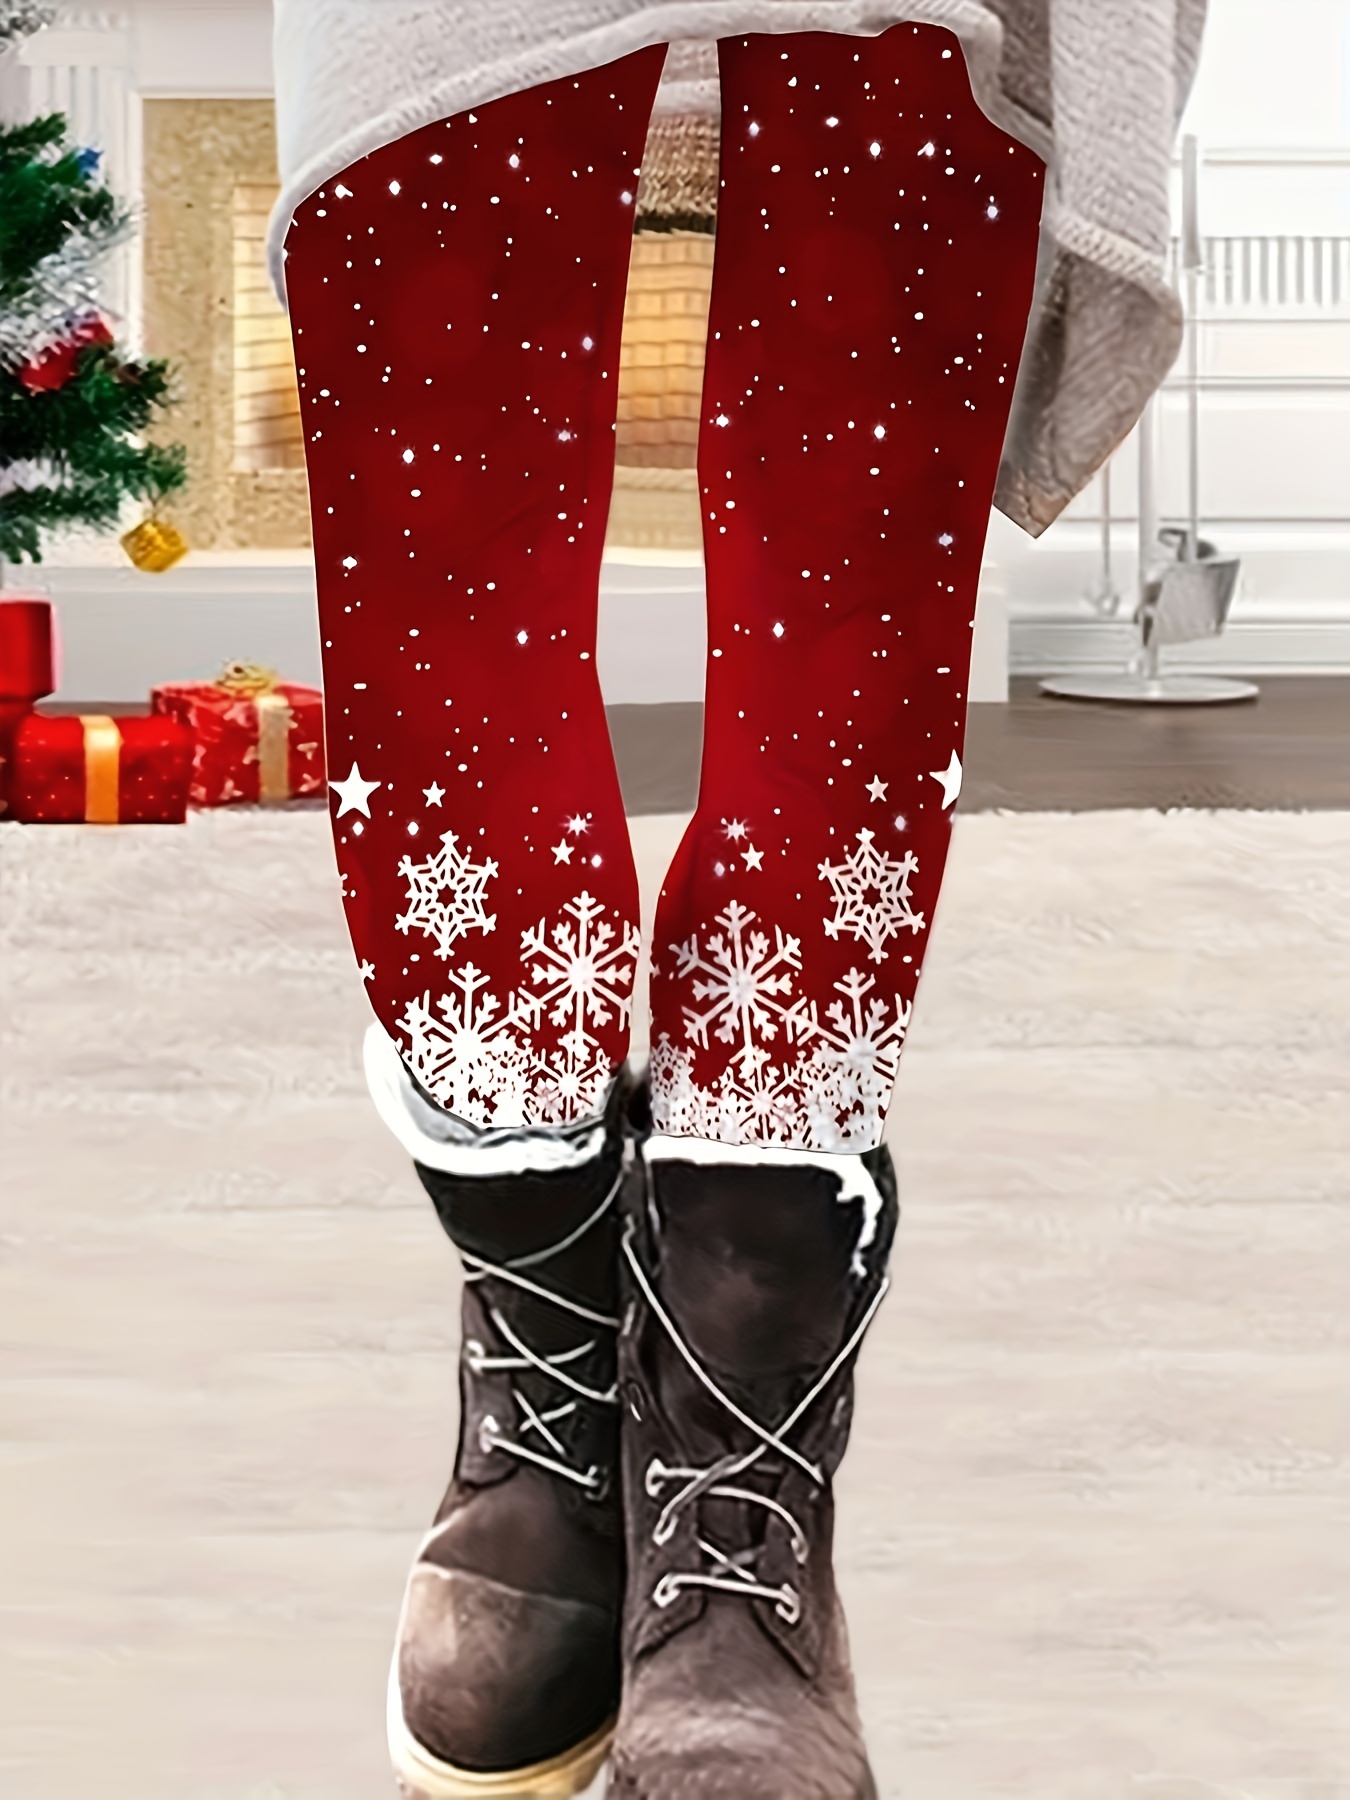 XMAS Leggings Womens Christmas Elastic Snowflake Pants Stocking Legging AUS